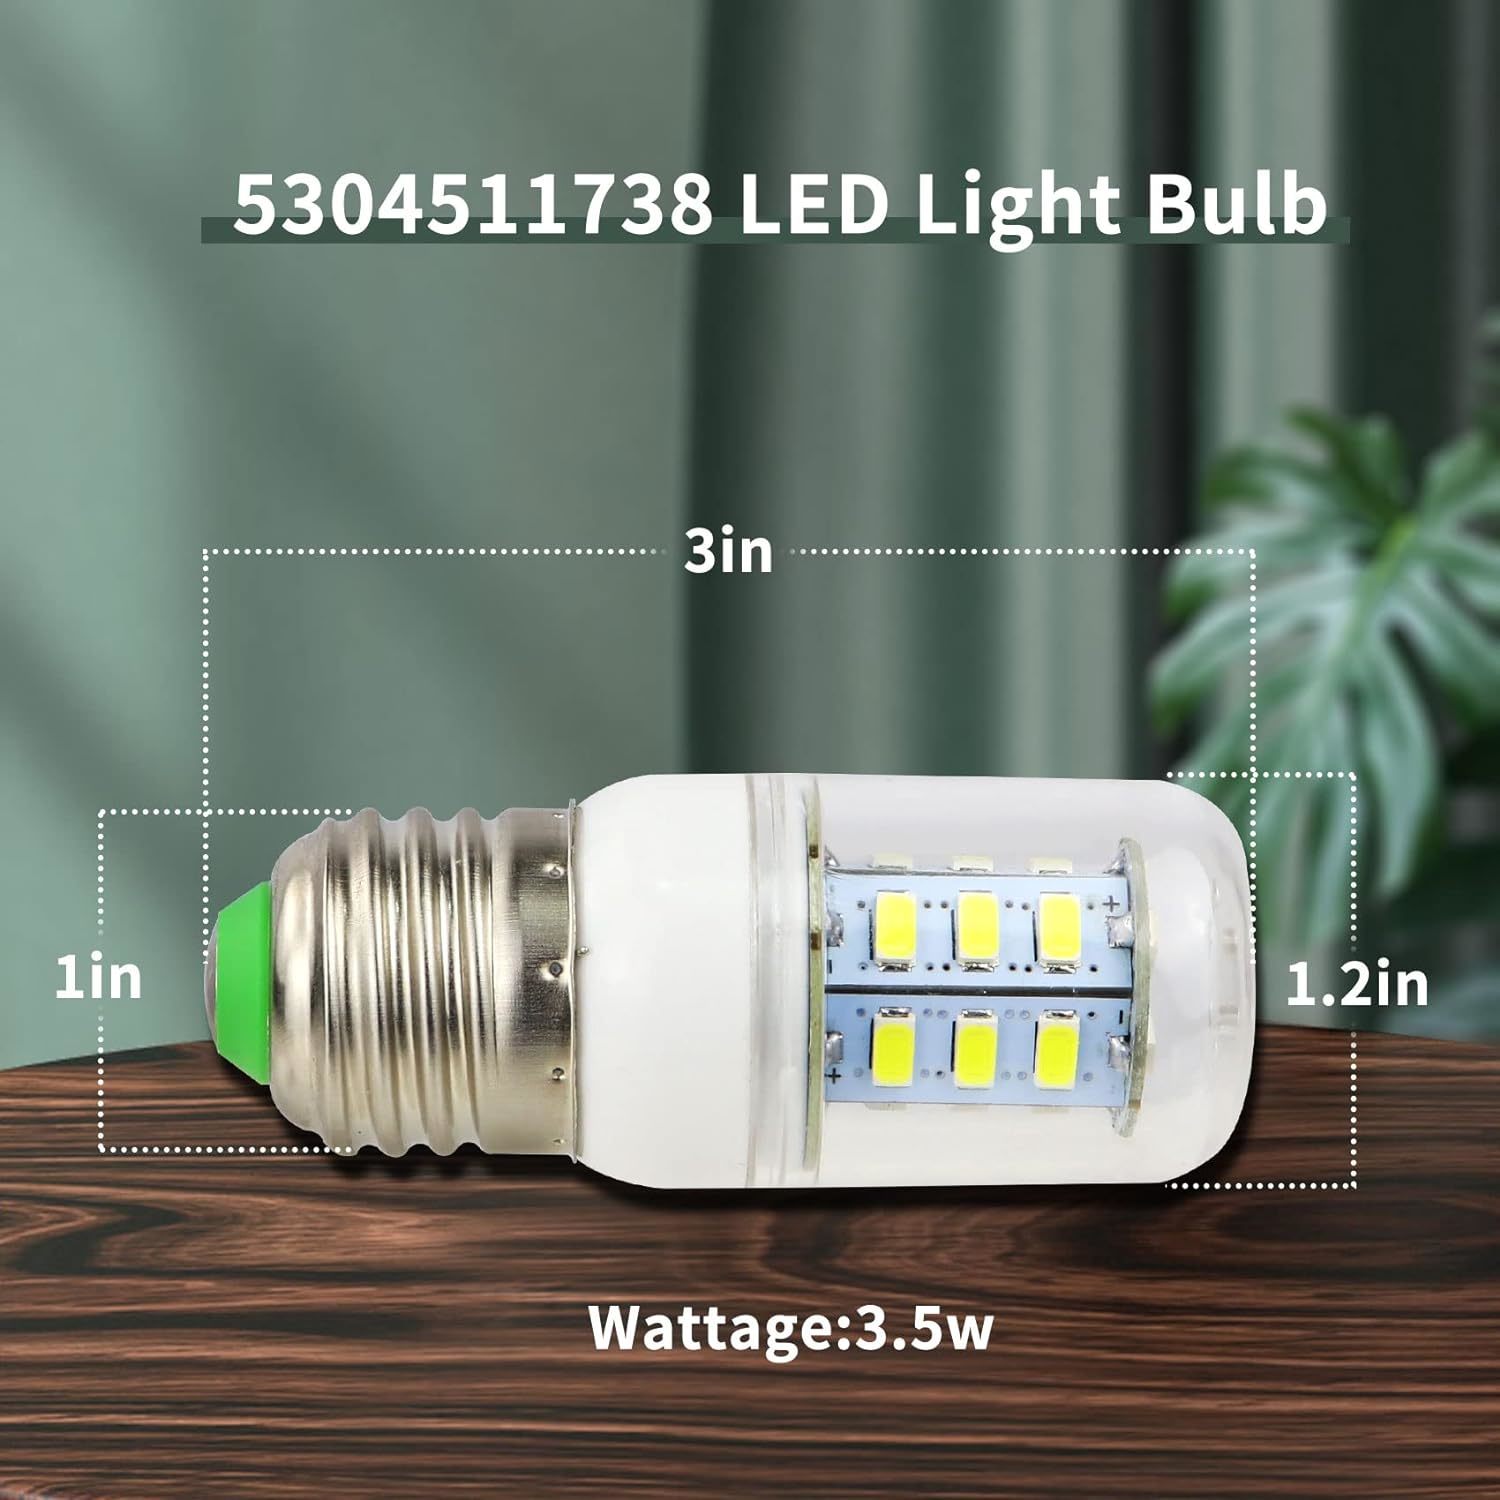 5304511738 LED Refrigerator Light Bulb Replacement for Frigidaire